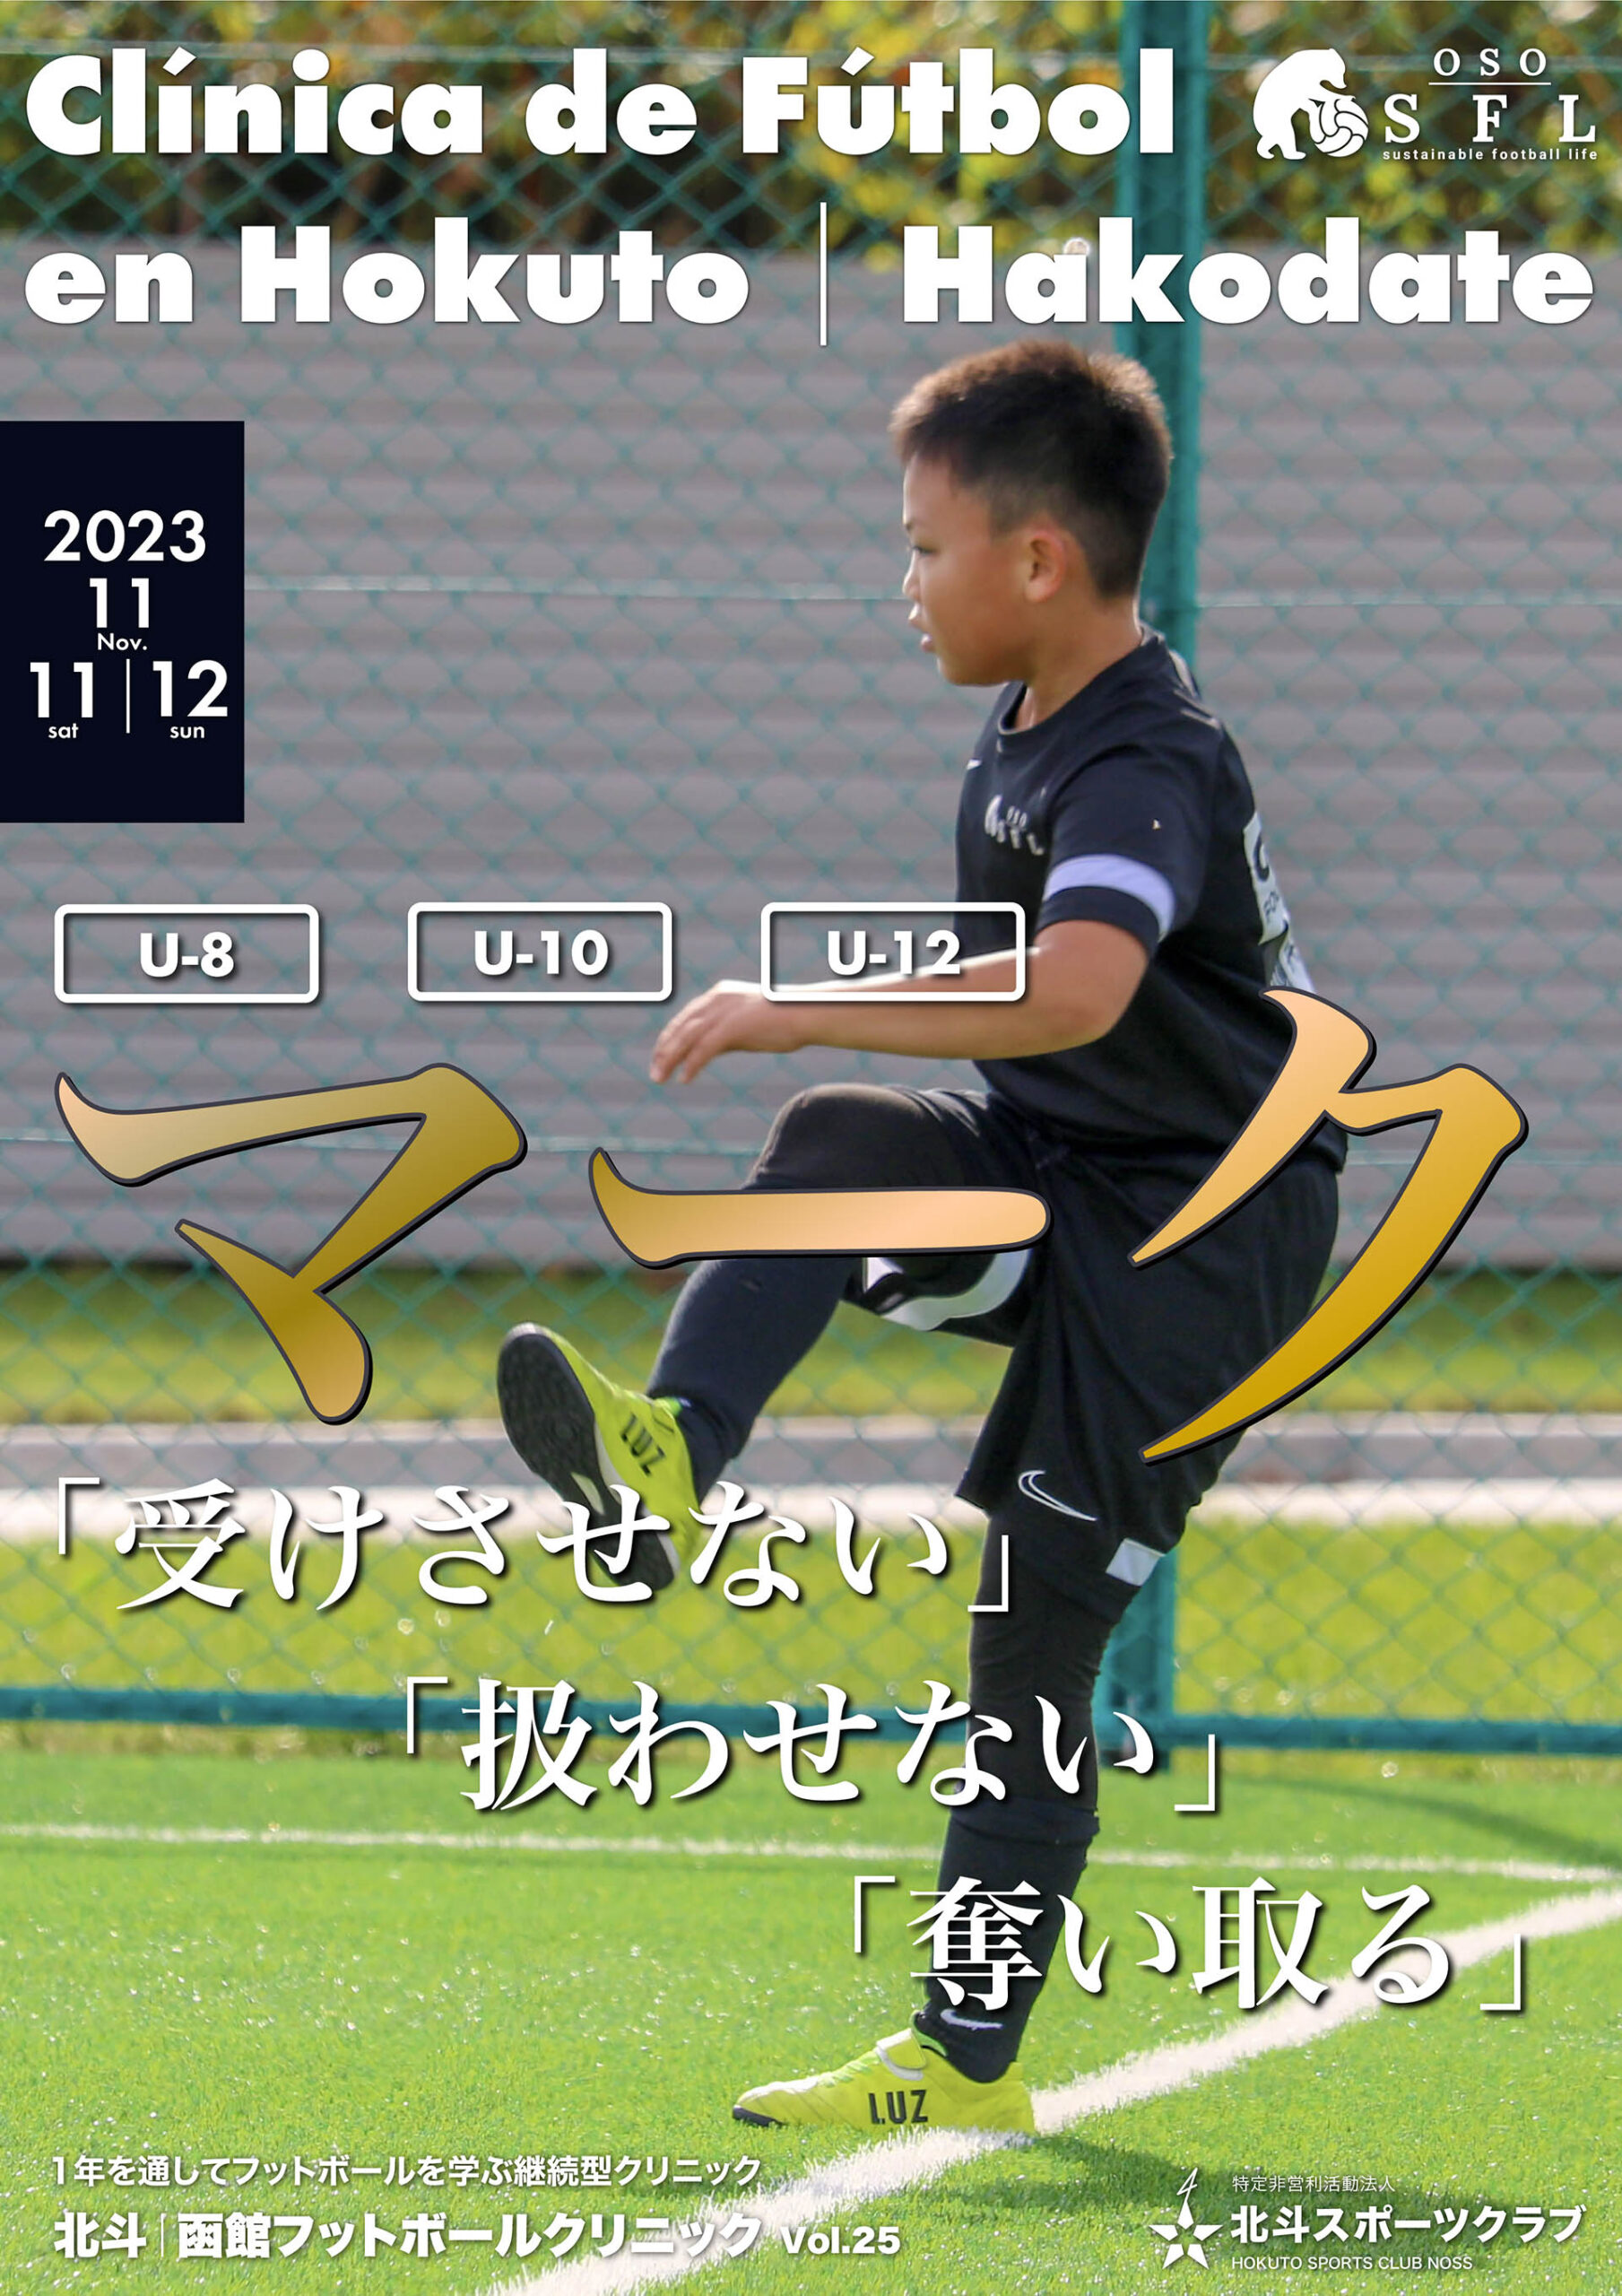 20230522_notice-hokuto-hakodate-football-clinic-2023-vol20